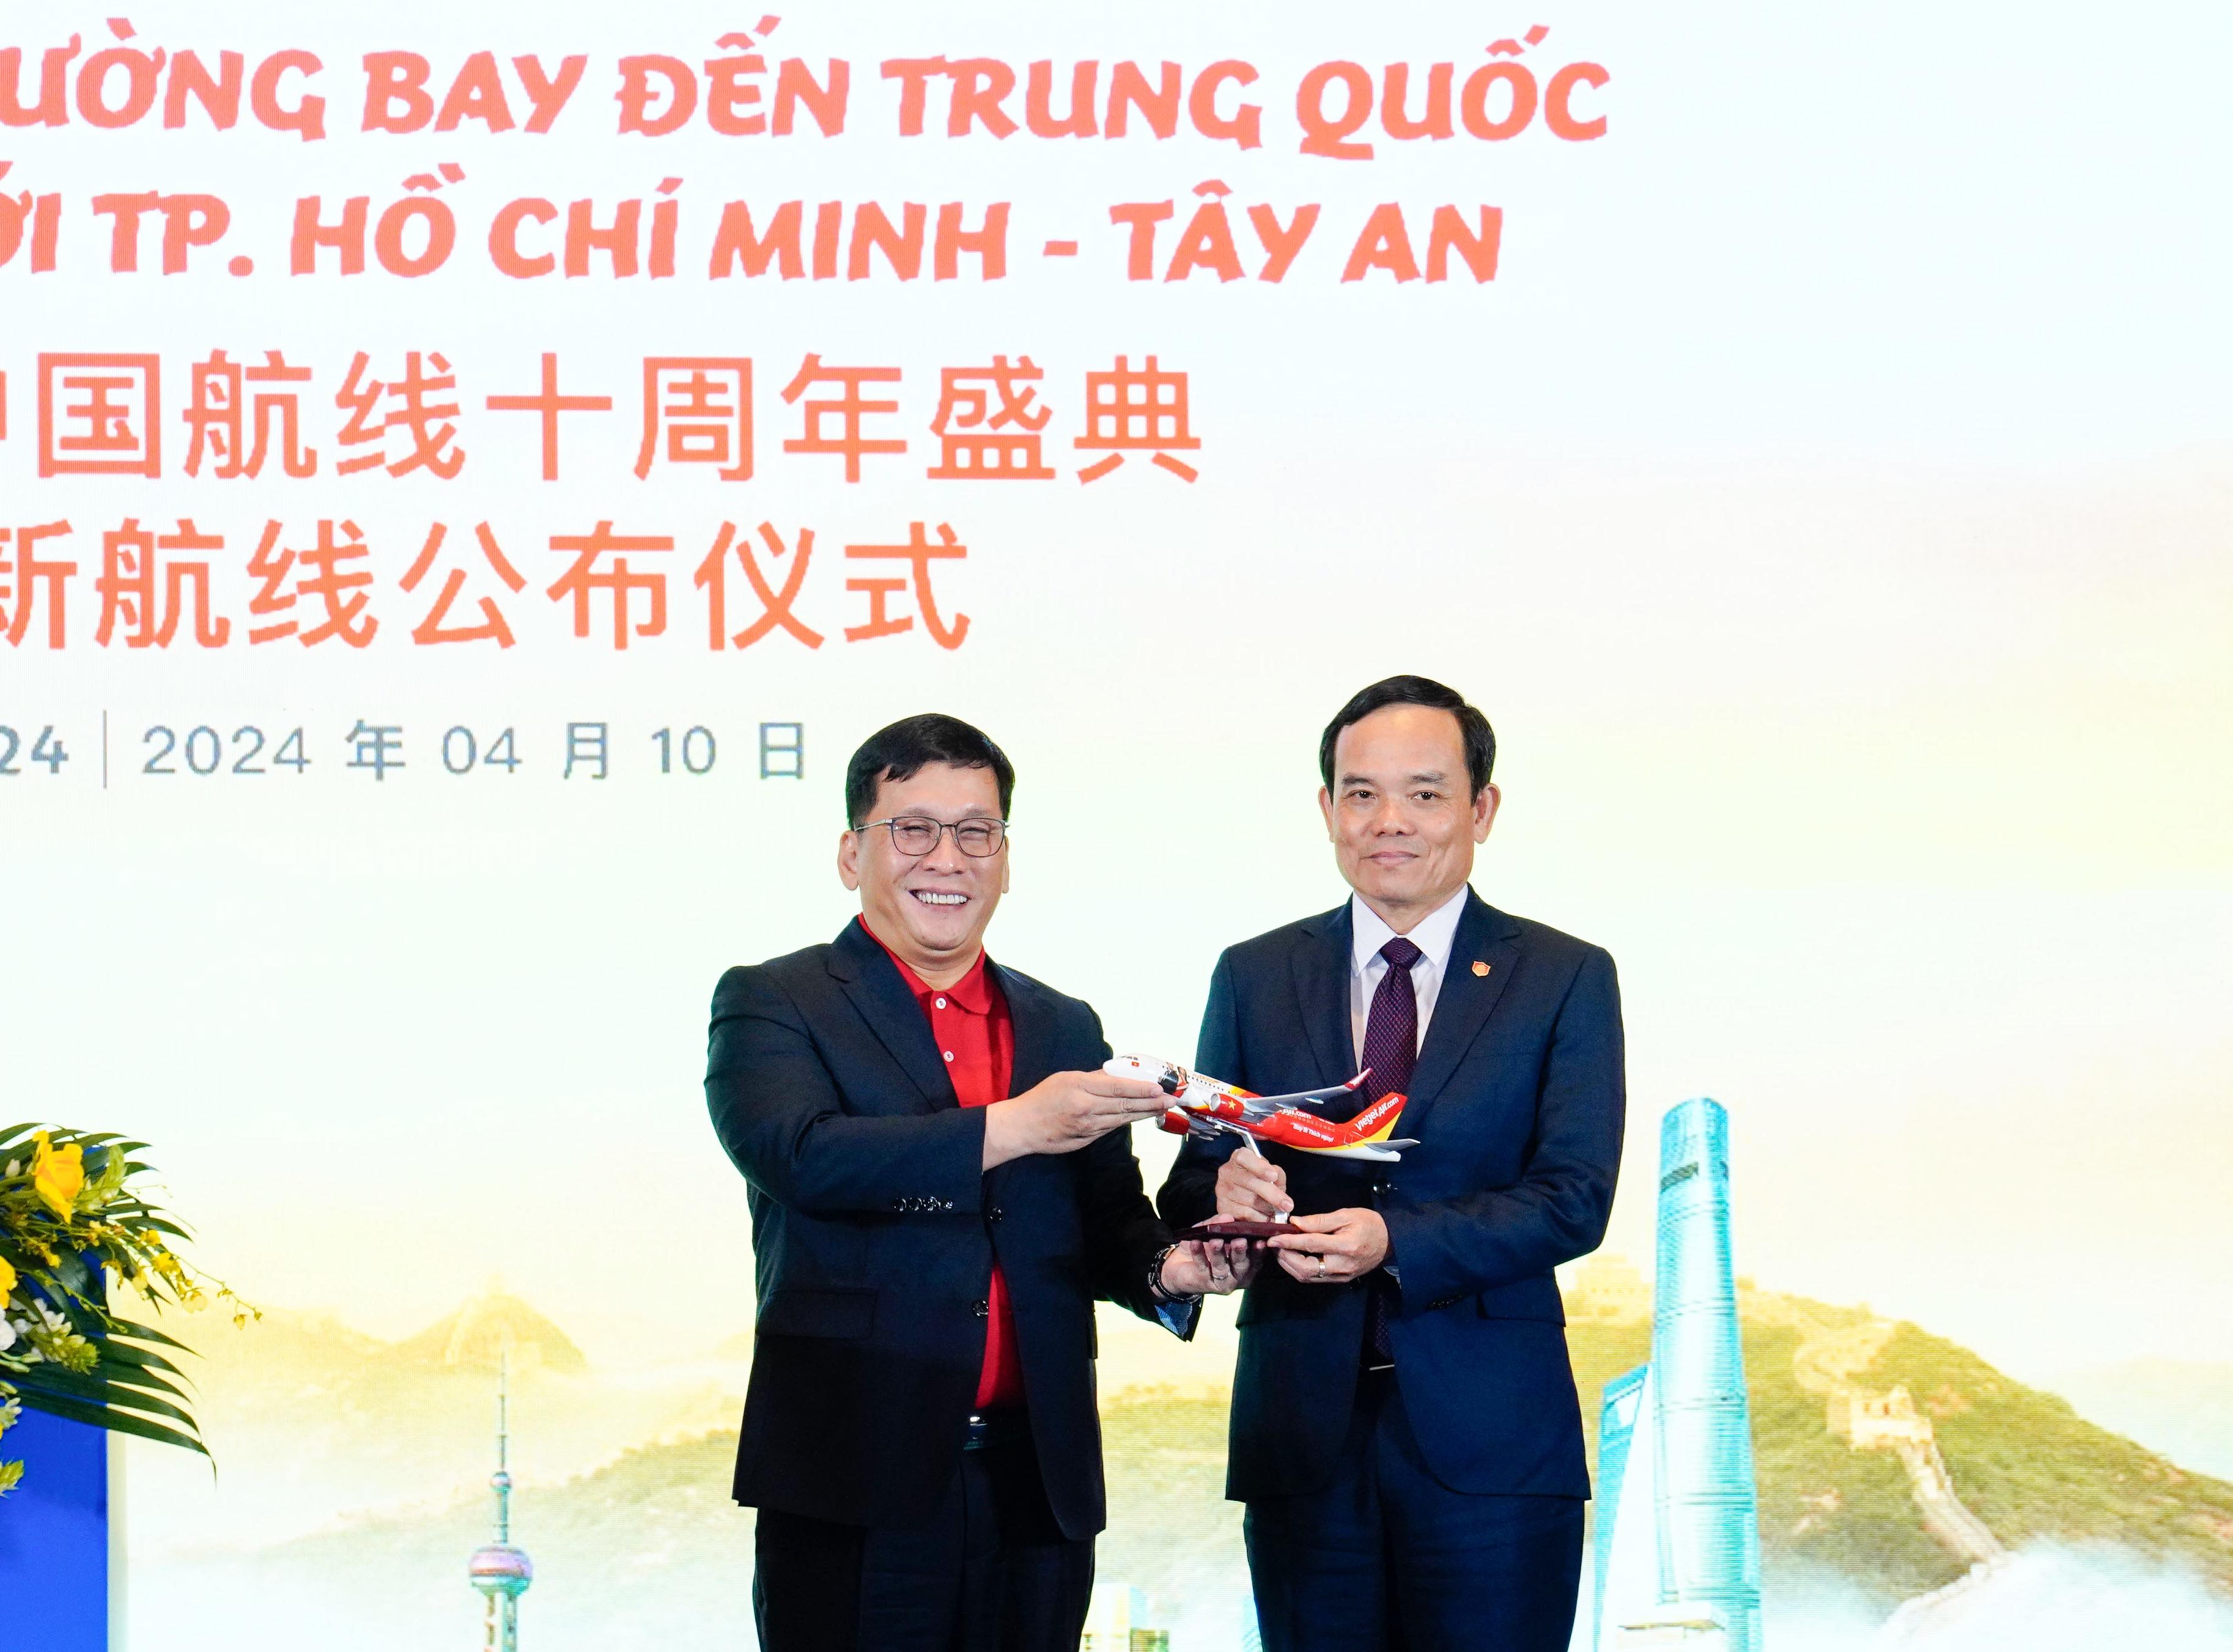 Vietjet_CEO_gives_appreciative_present_to_Vietnam_Deputy_Prime_Minister